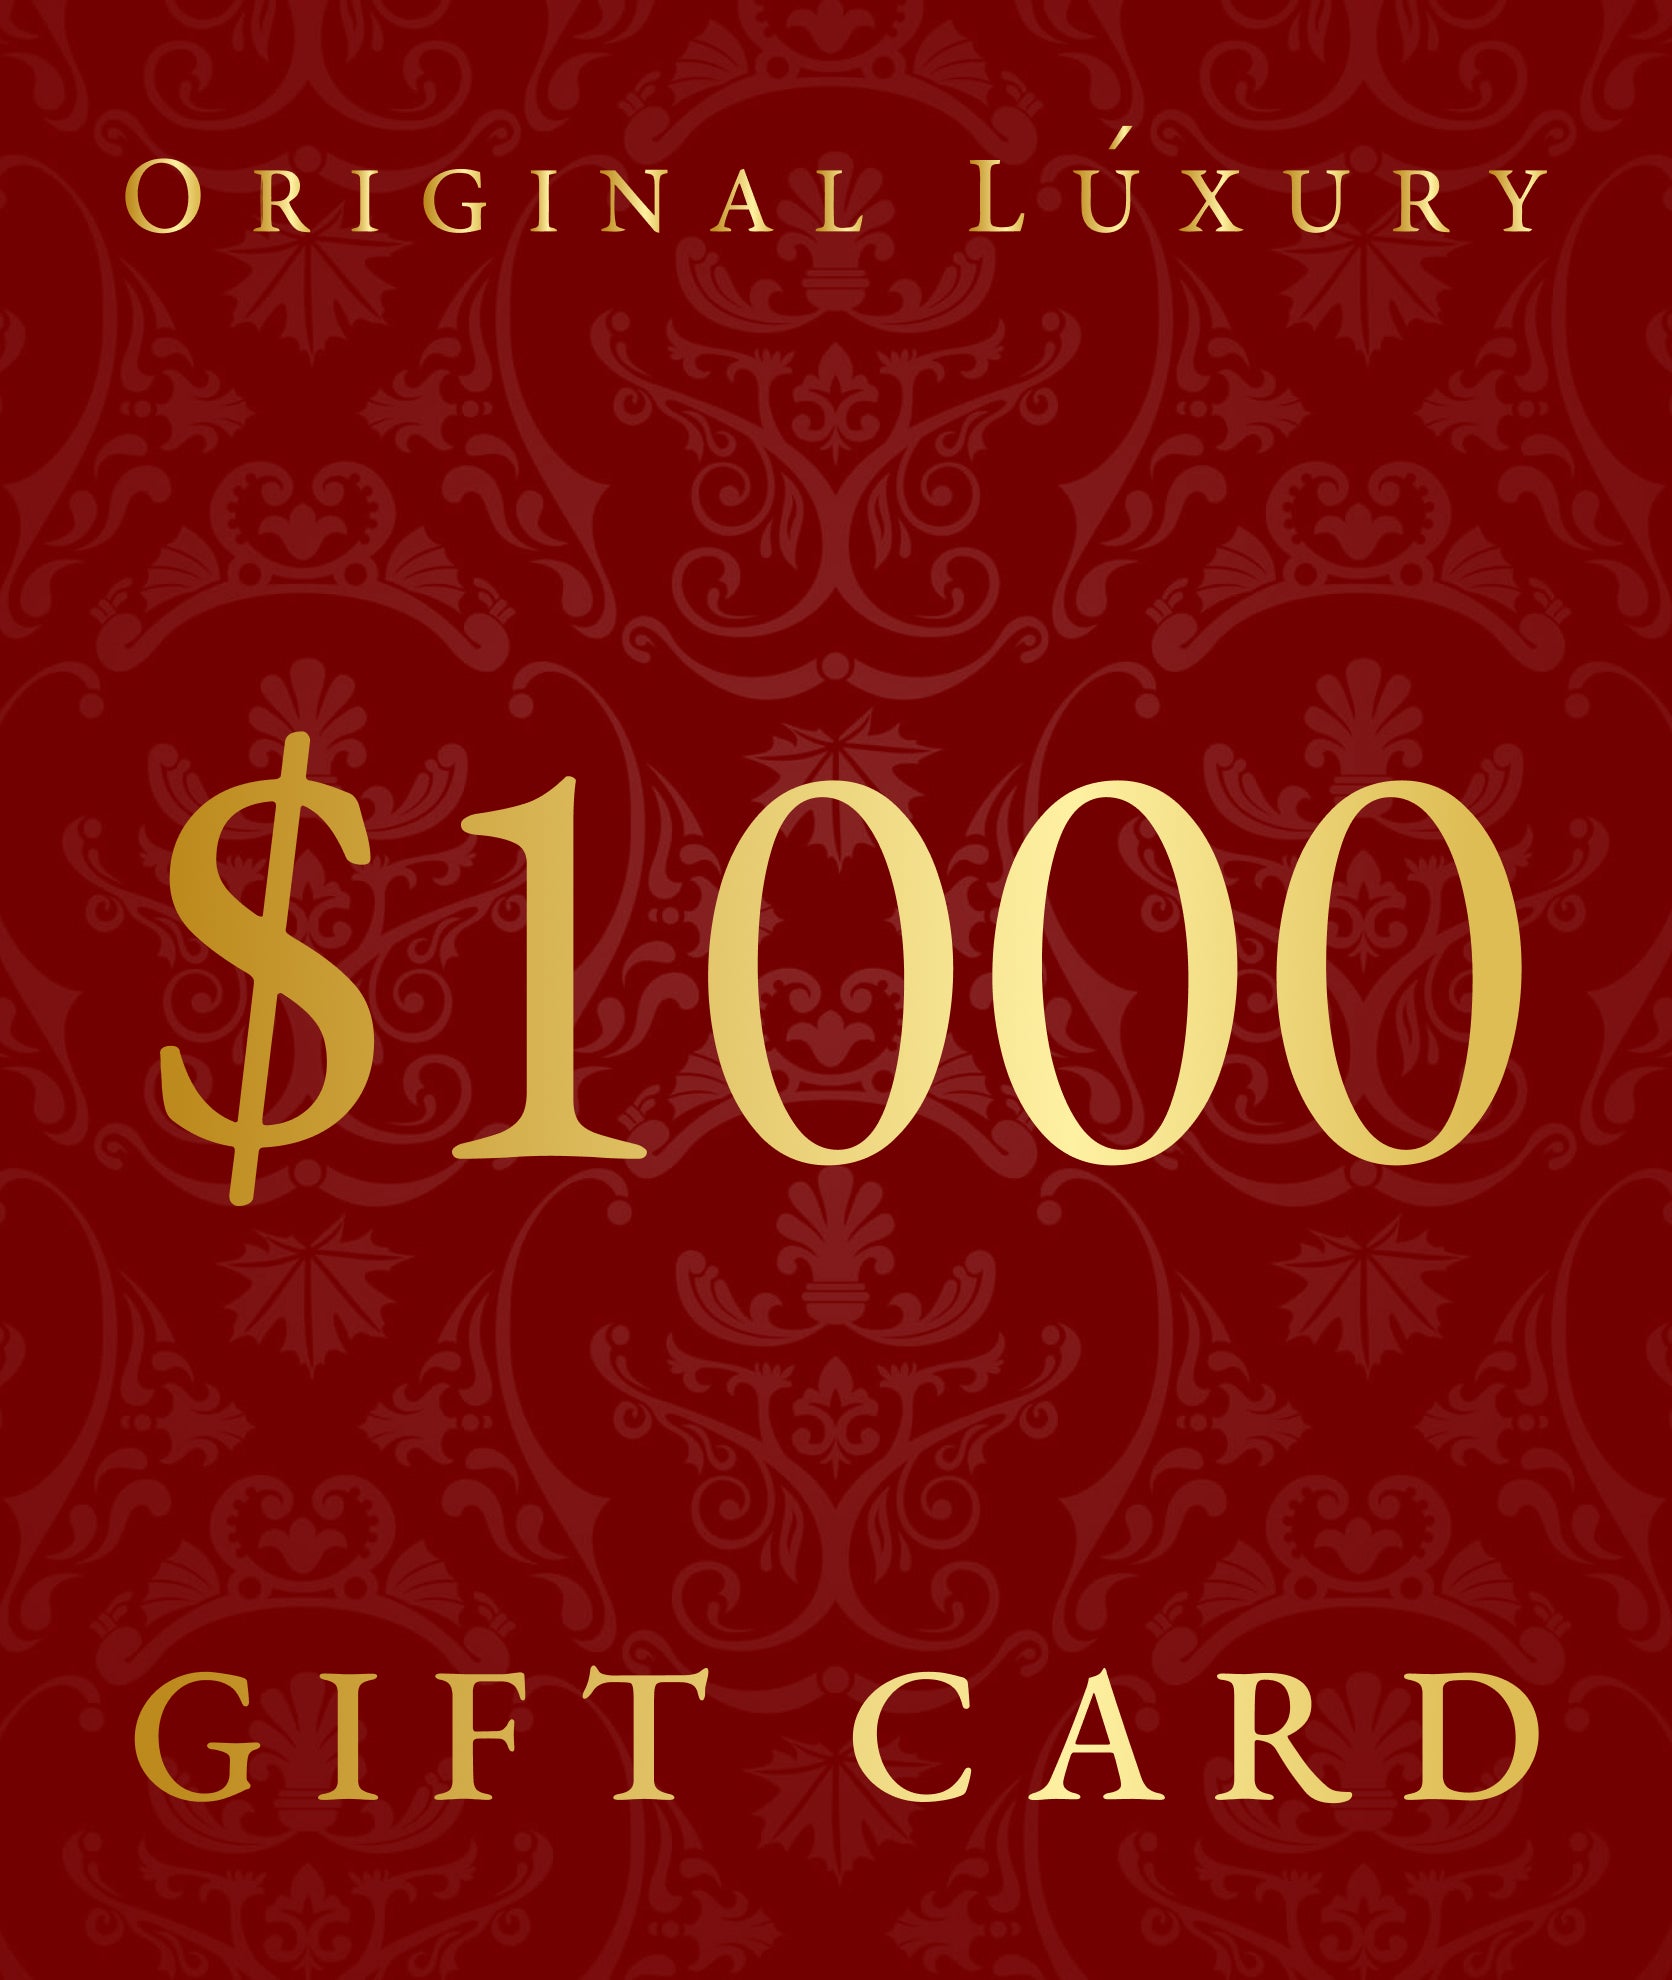 OriginalLuxury Gift Card | $1000